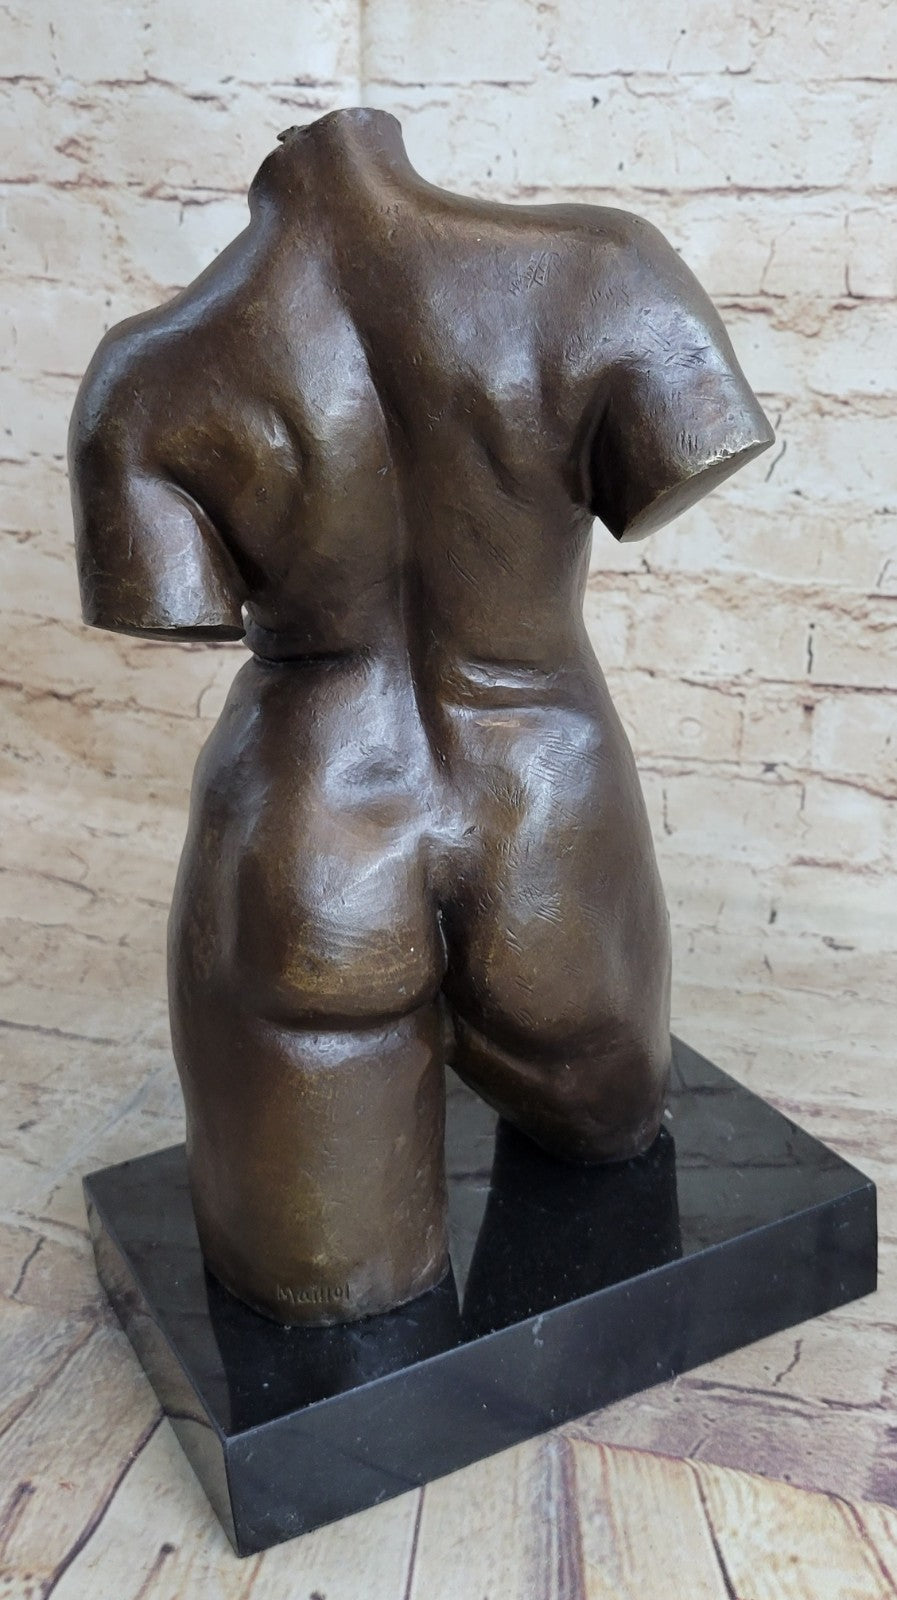 Hot Cast Handcrafted Maillol Female Nude Bronze Sculpture Statue Home Decor